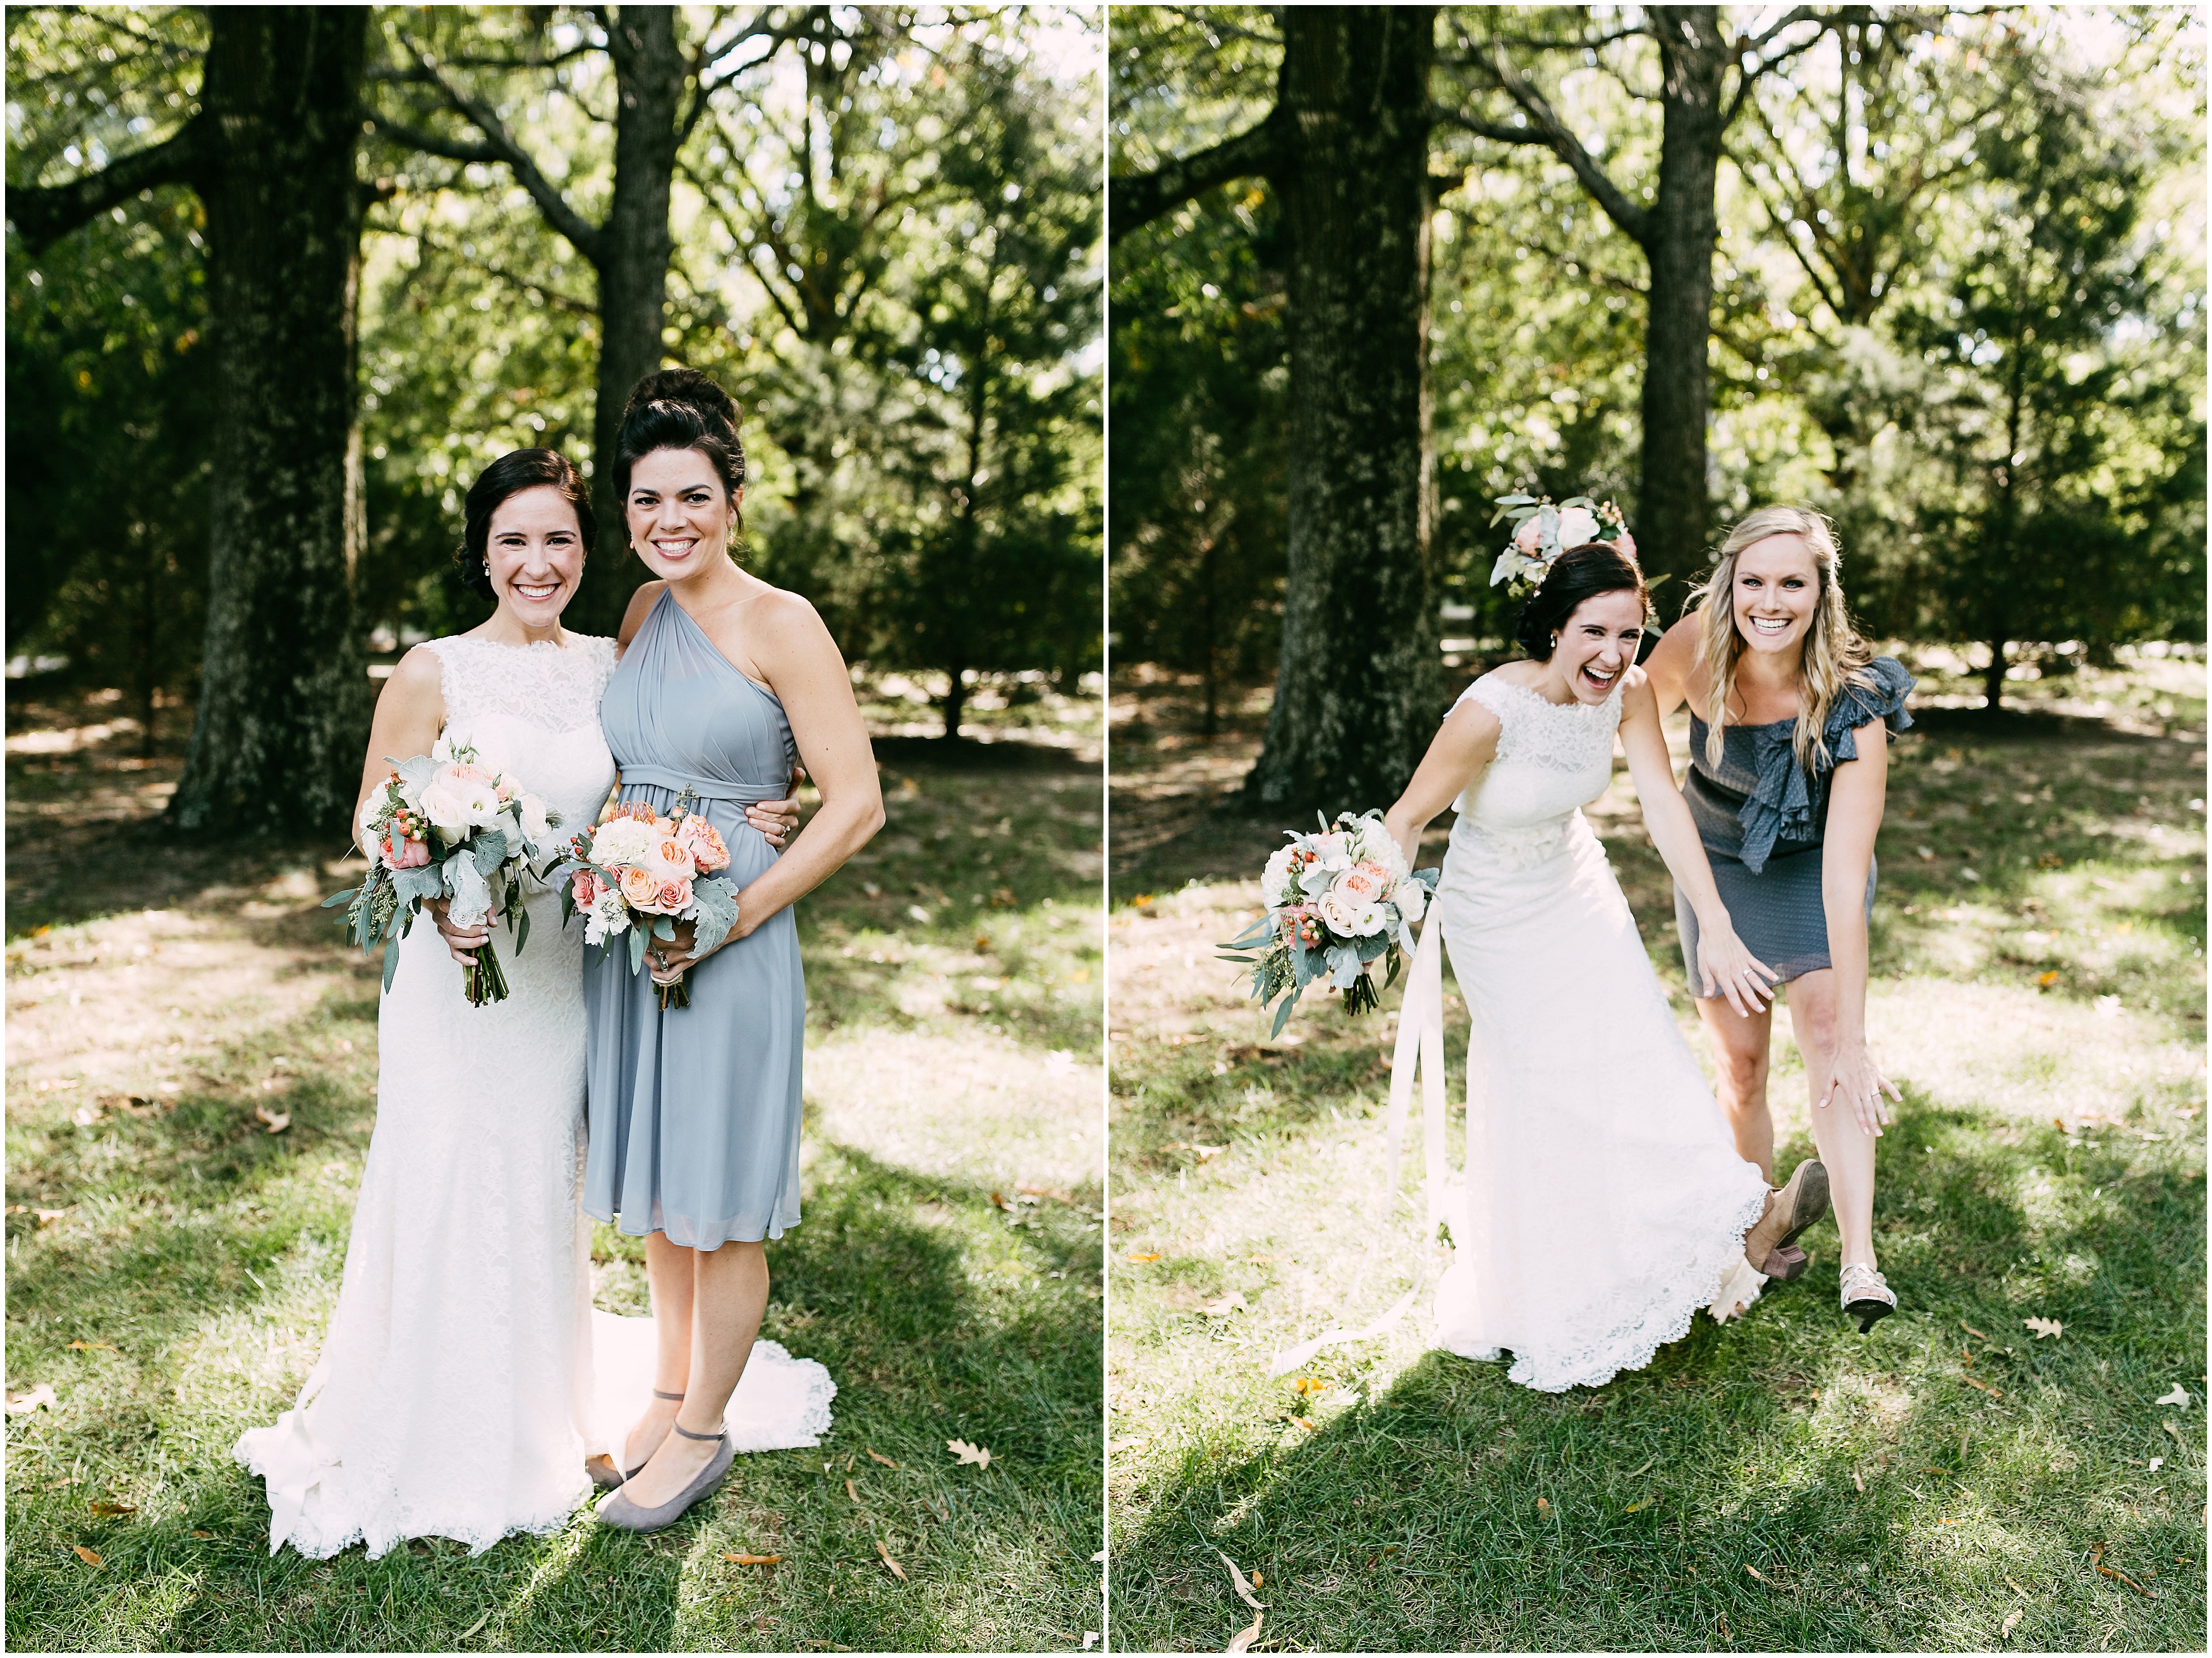 peonies-bride-bouquet-coral-and-grey-wedding-colors